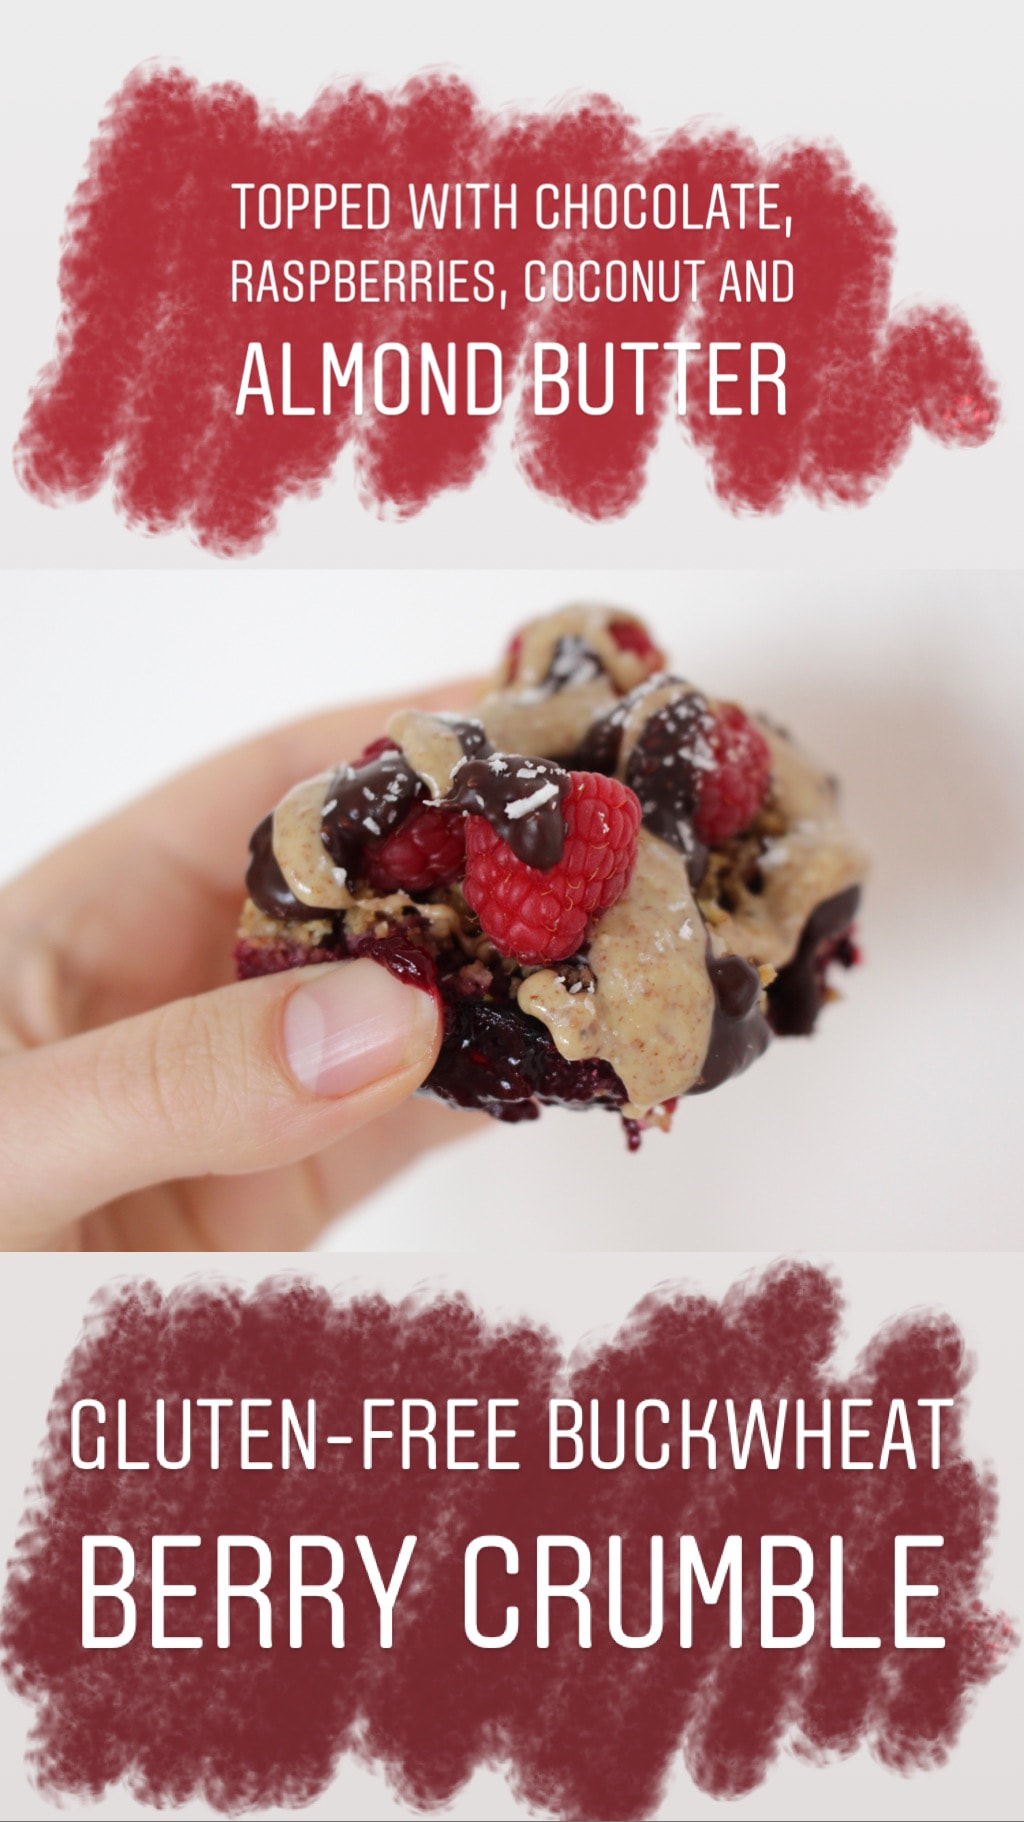 Gluten-Free Buckwheat Berry Crumble #glutenfree #crumble #refinedsugarfree #dairyfree #berries #dessert #healthydessert